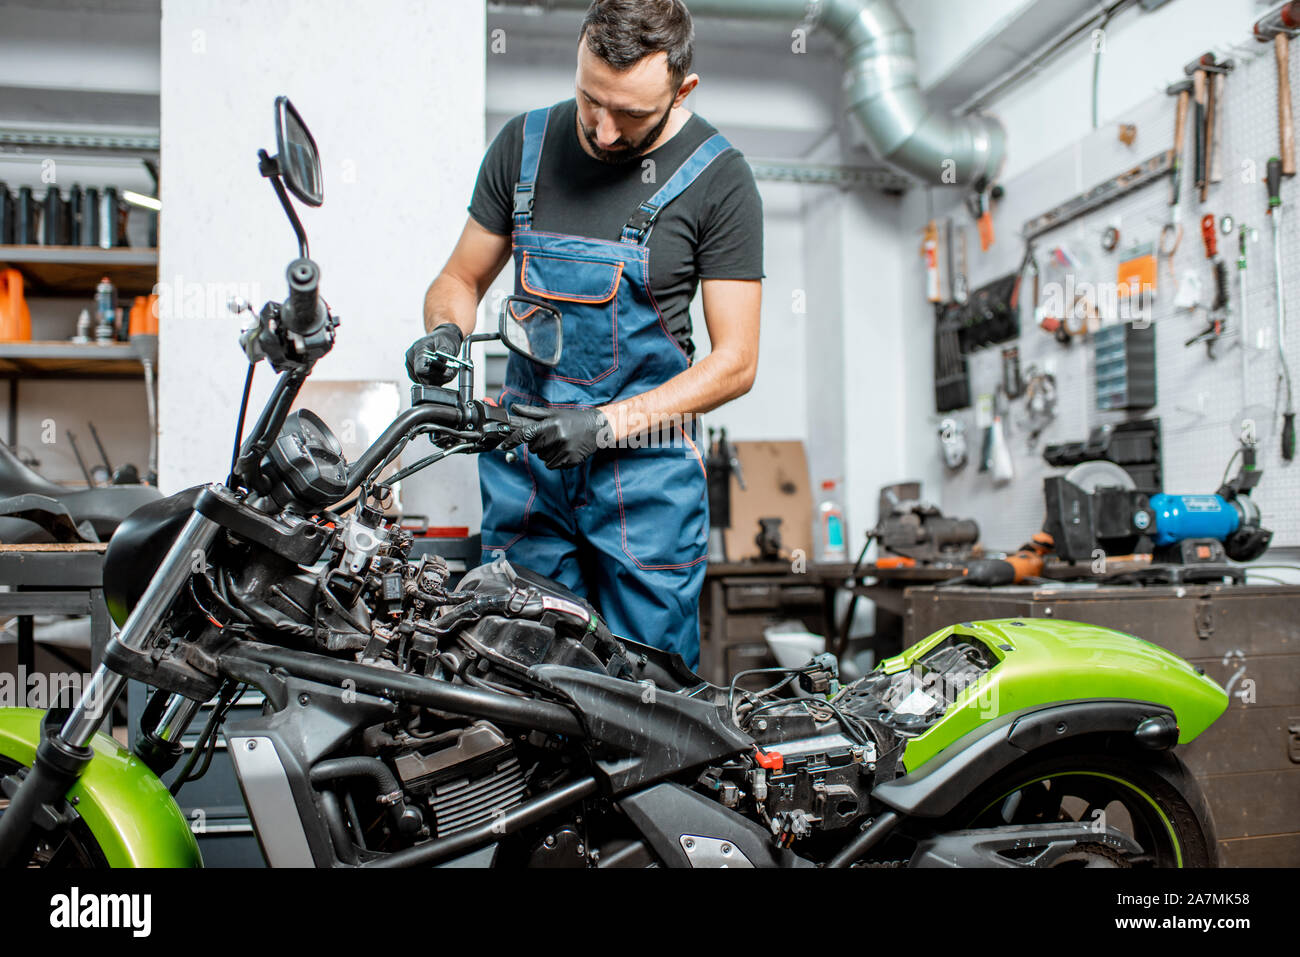 Mechaniker in Latzhosen Motorrad reparieren, Messen spiegel halter